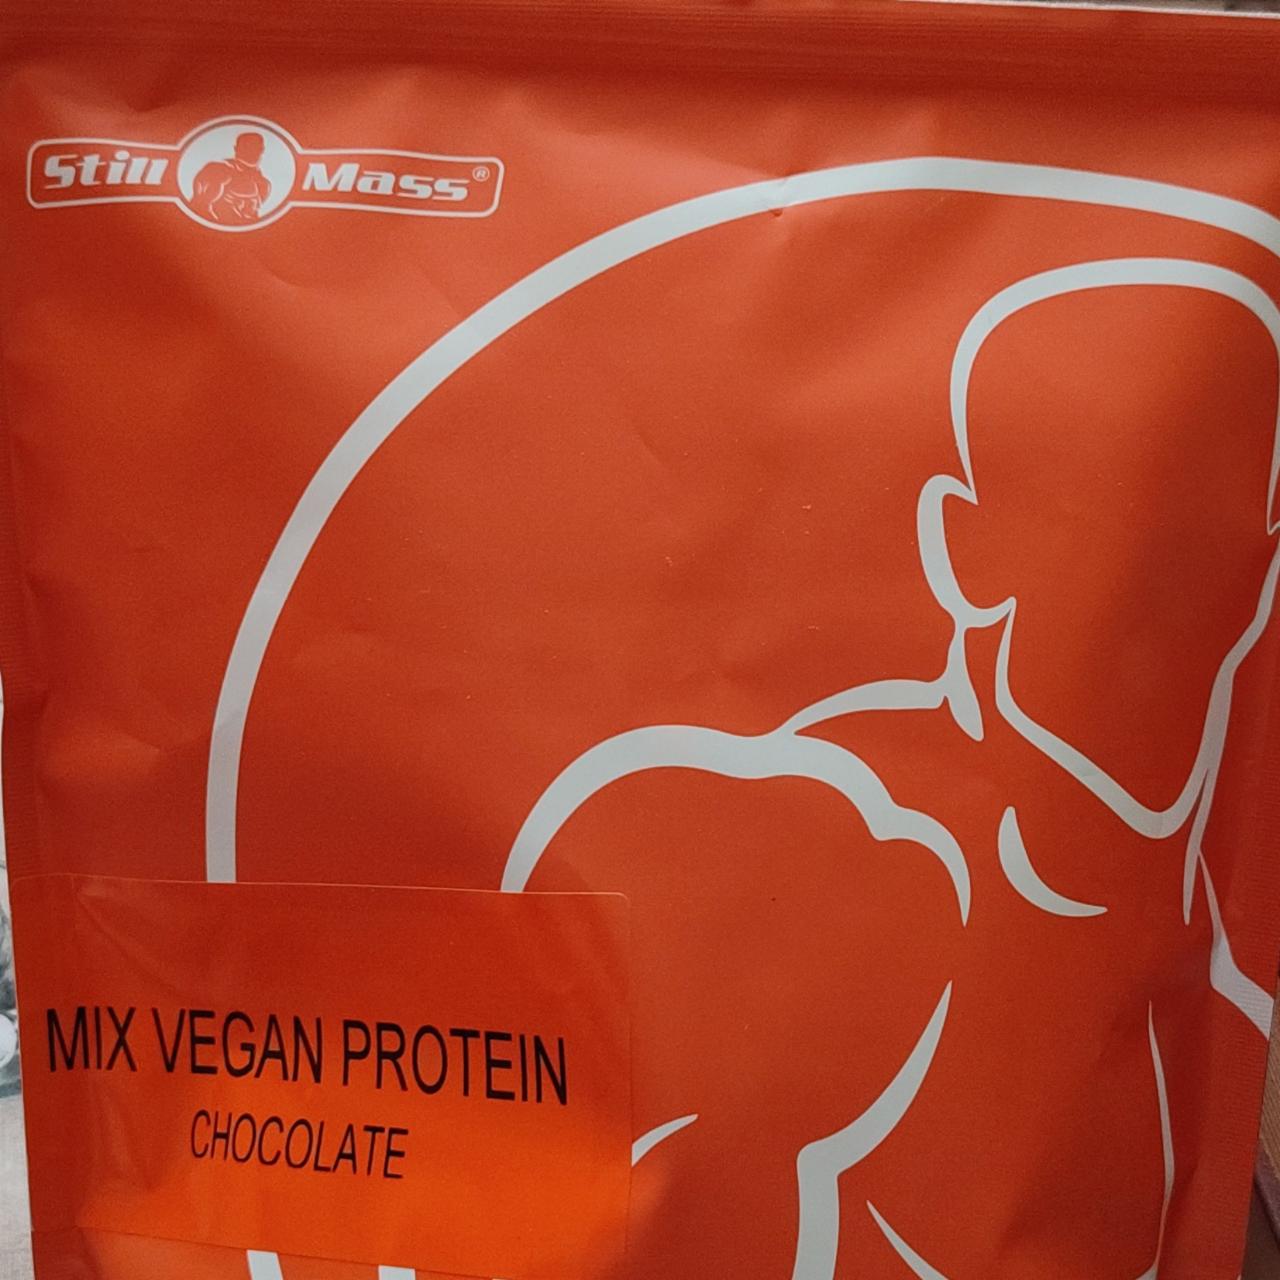 Fotografie - Mix Vegan Protein Chocolate Still Mass